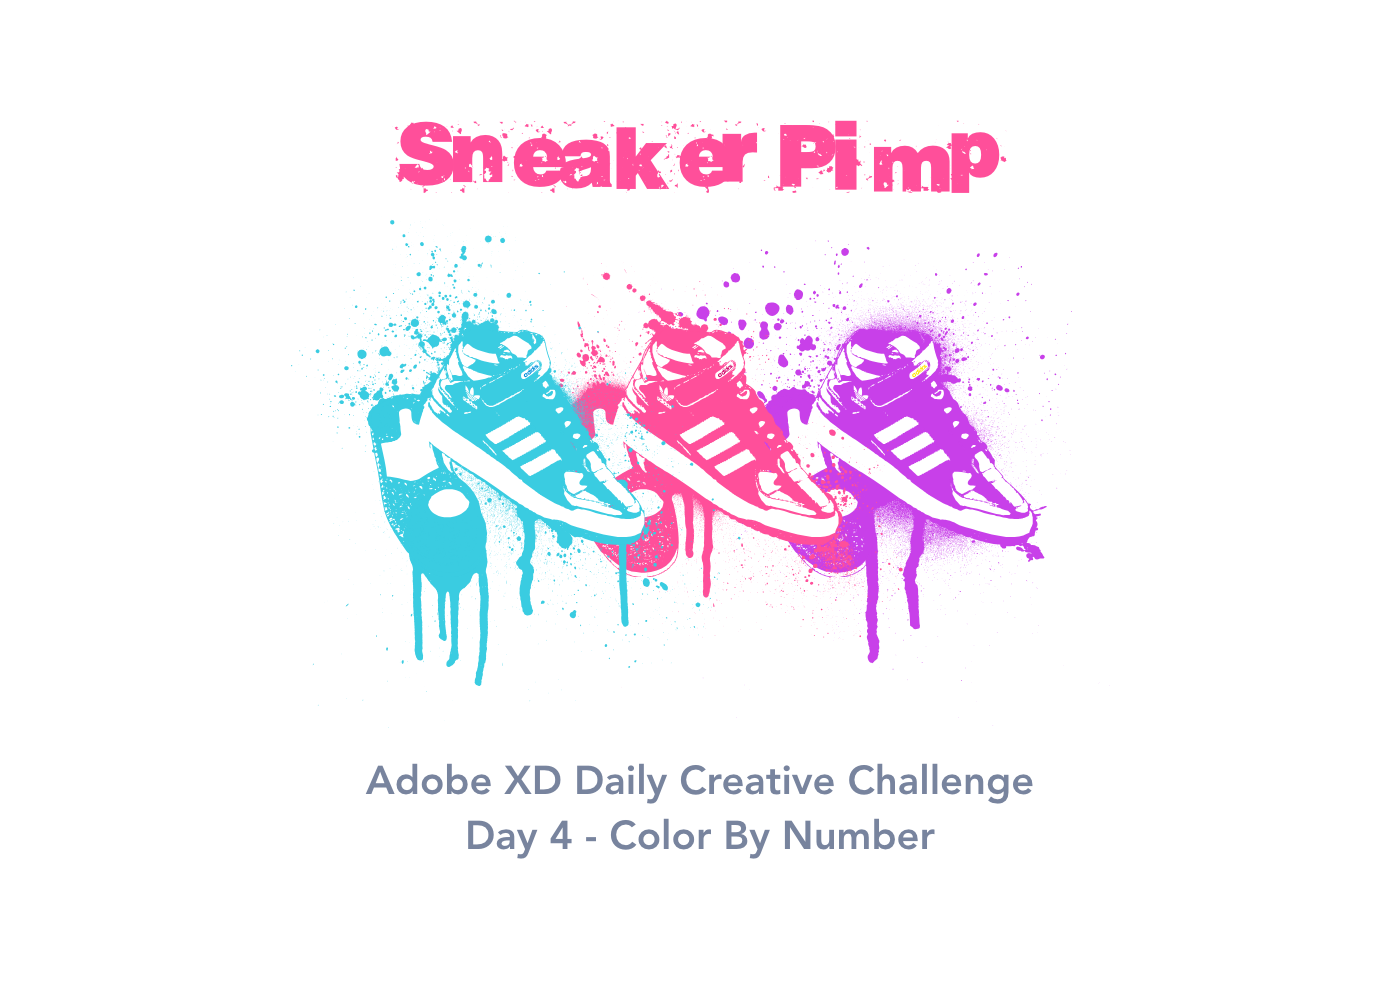 Adobe XD daily challenge